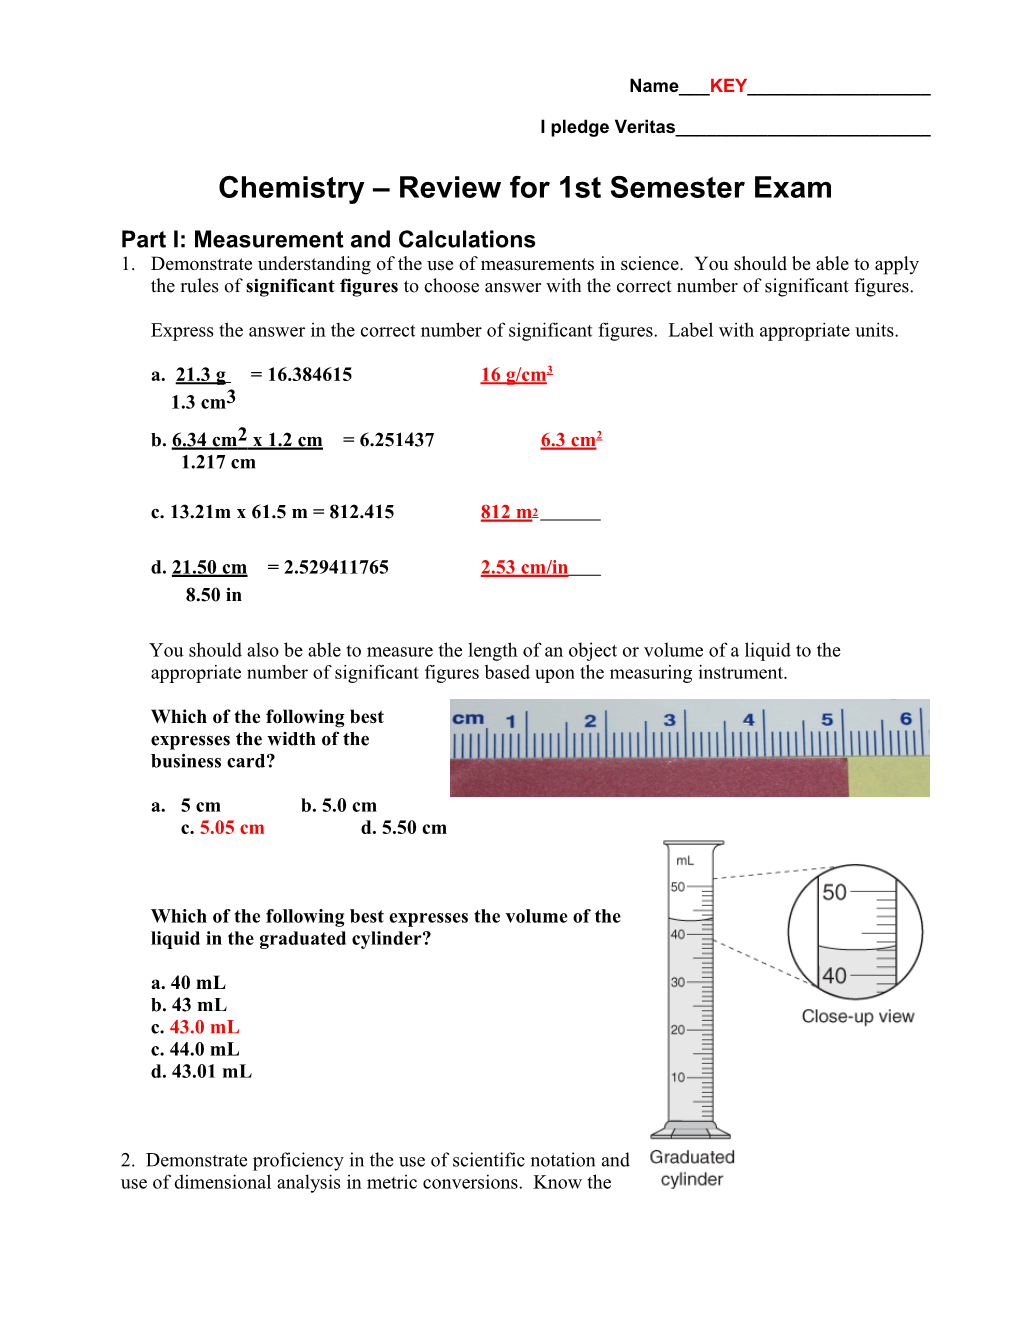 Chemistry Review for 1St Semester Exam